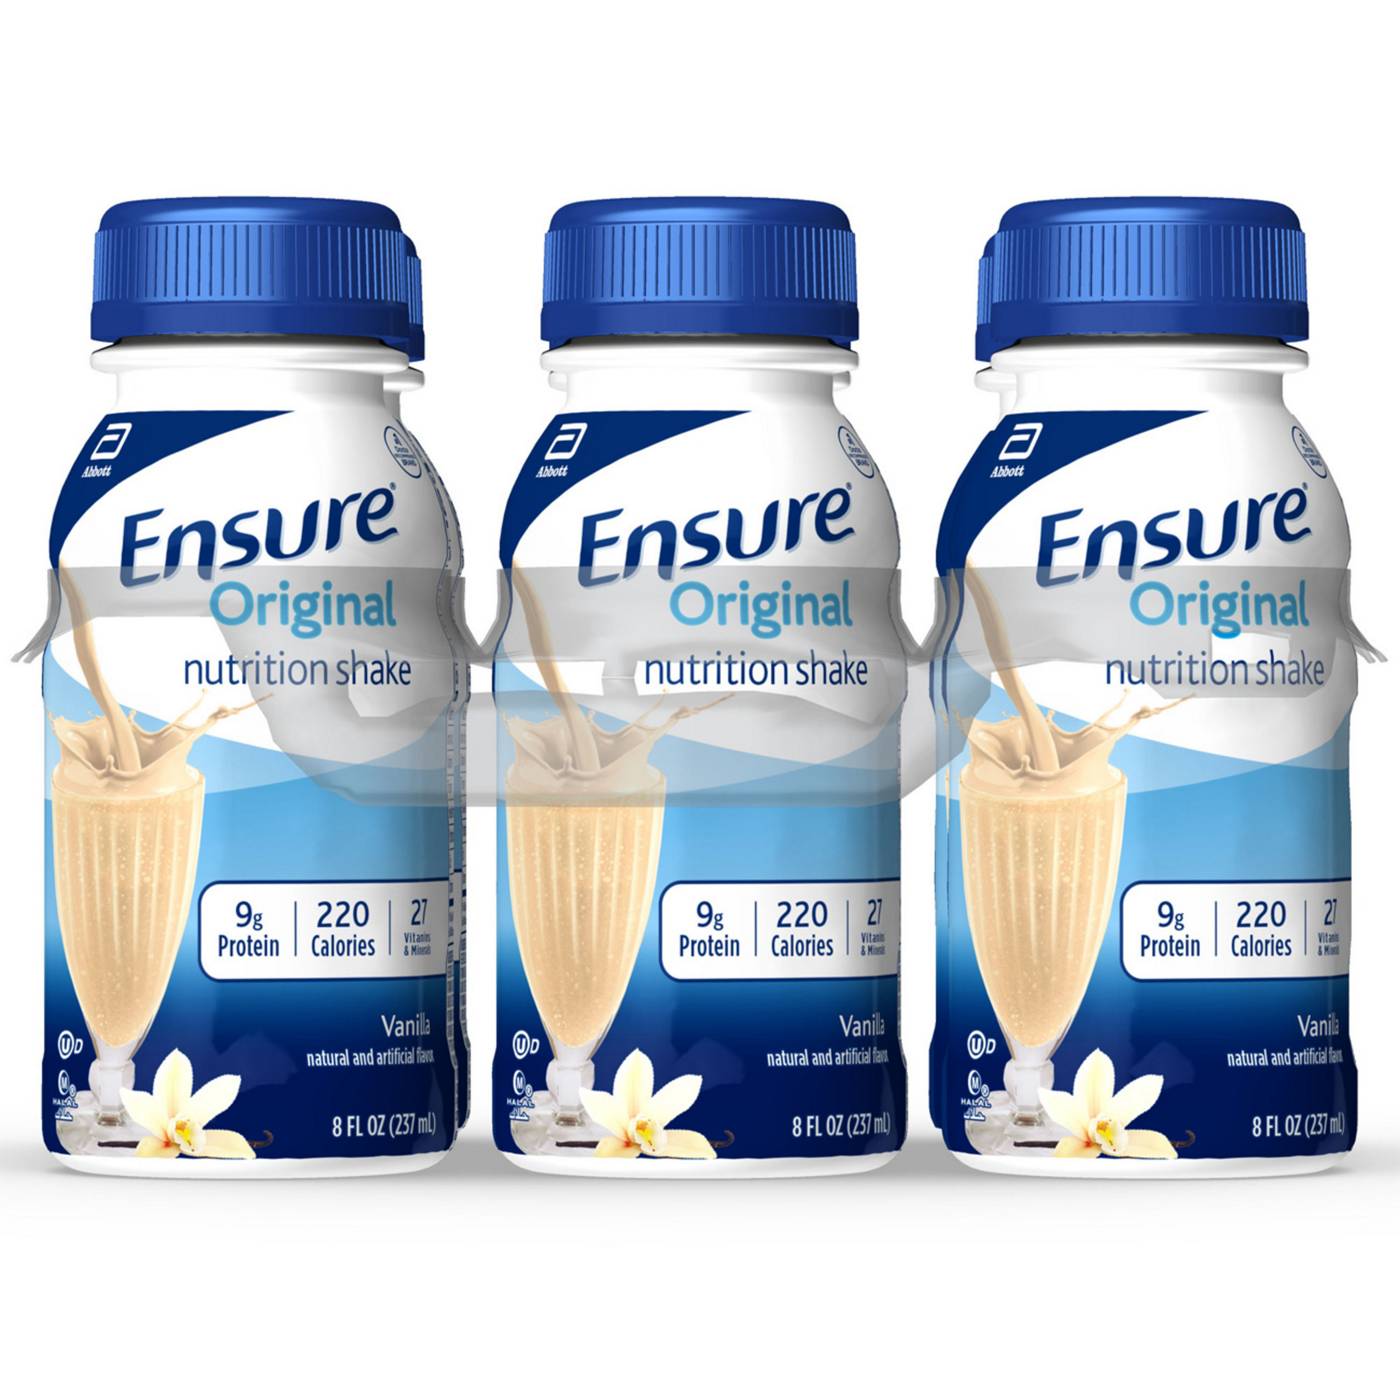 Ensure Original Nutrition Shake - Vanilla; image 1 of 10